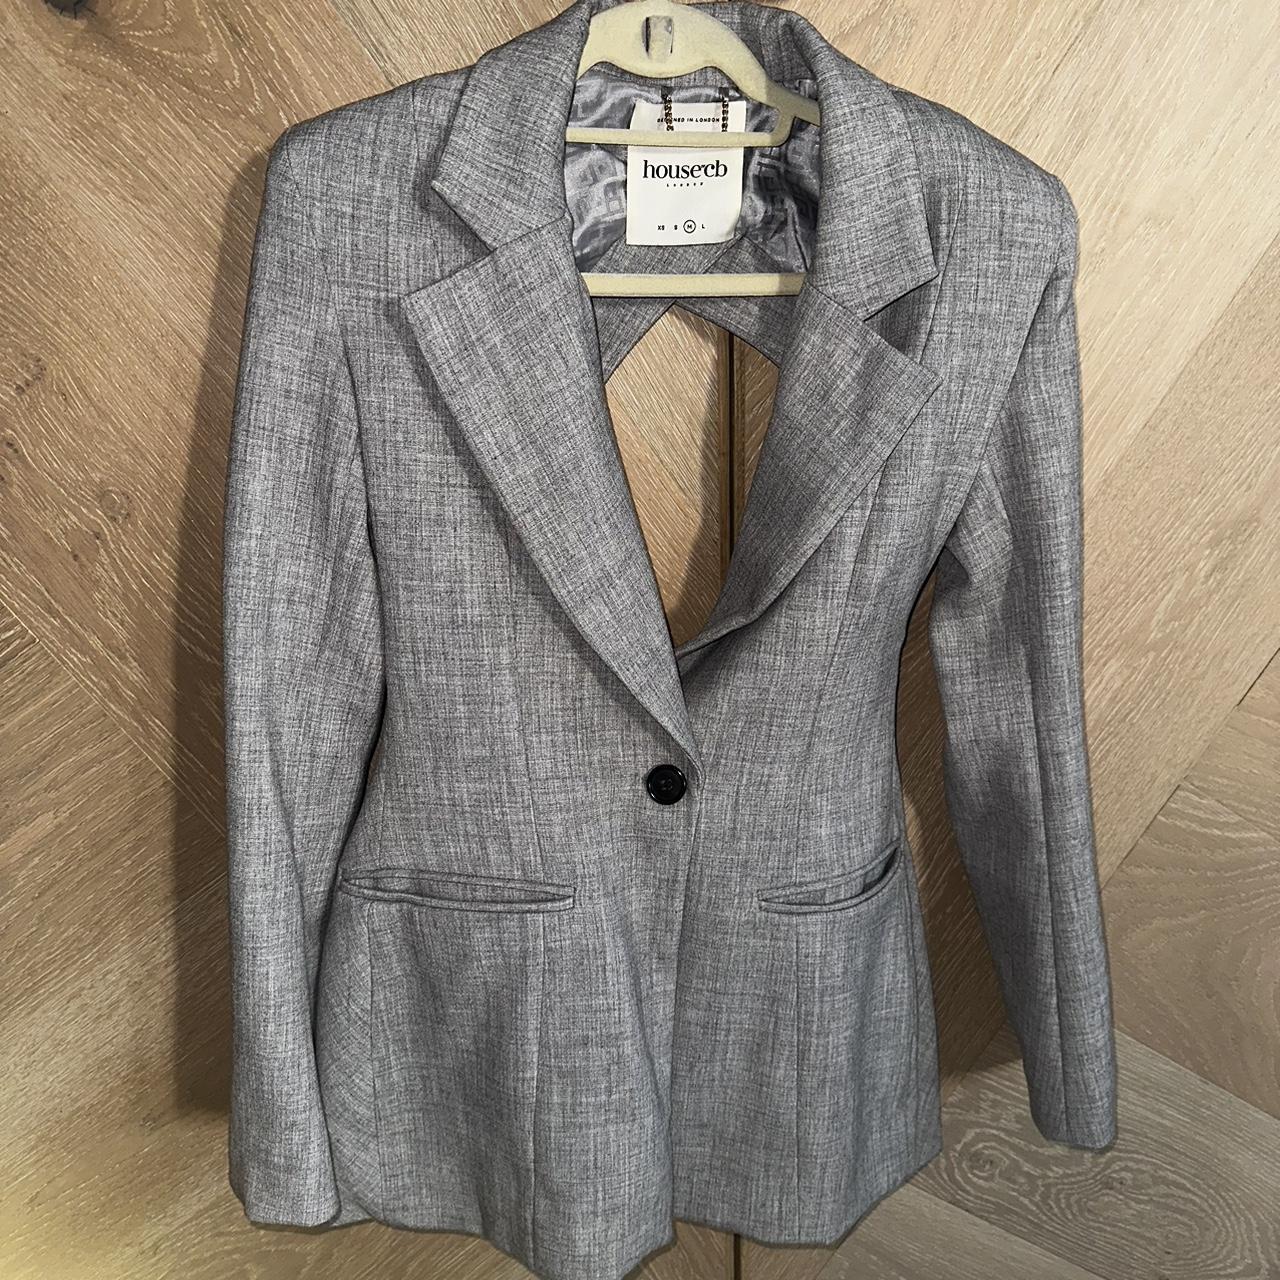 Gray backless suit never worn - Depop